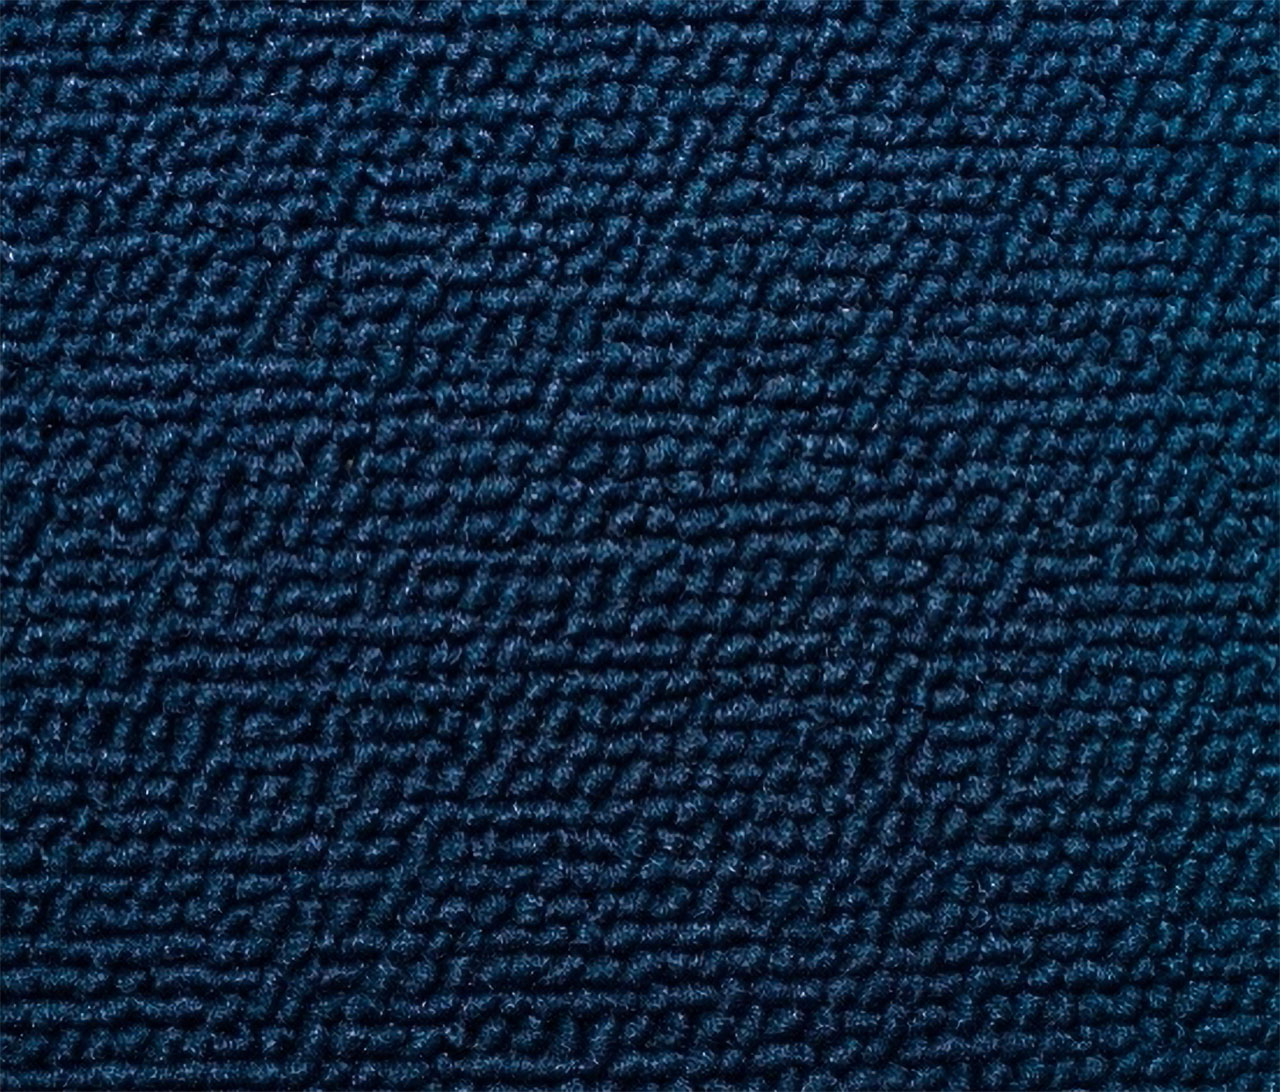 Holden Standard EJ Standard Wagon B04 Columbine Blue Carpet (Image 1 of 1)